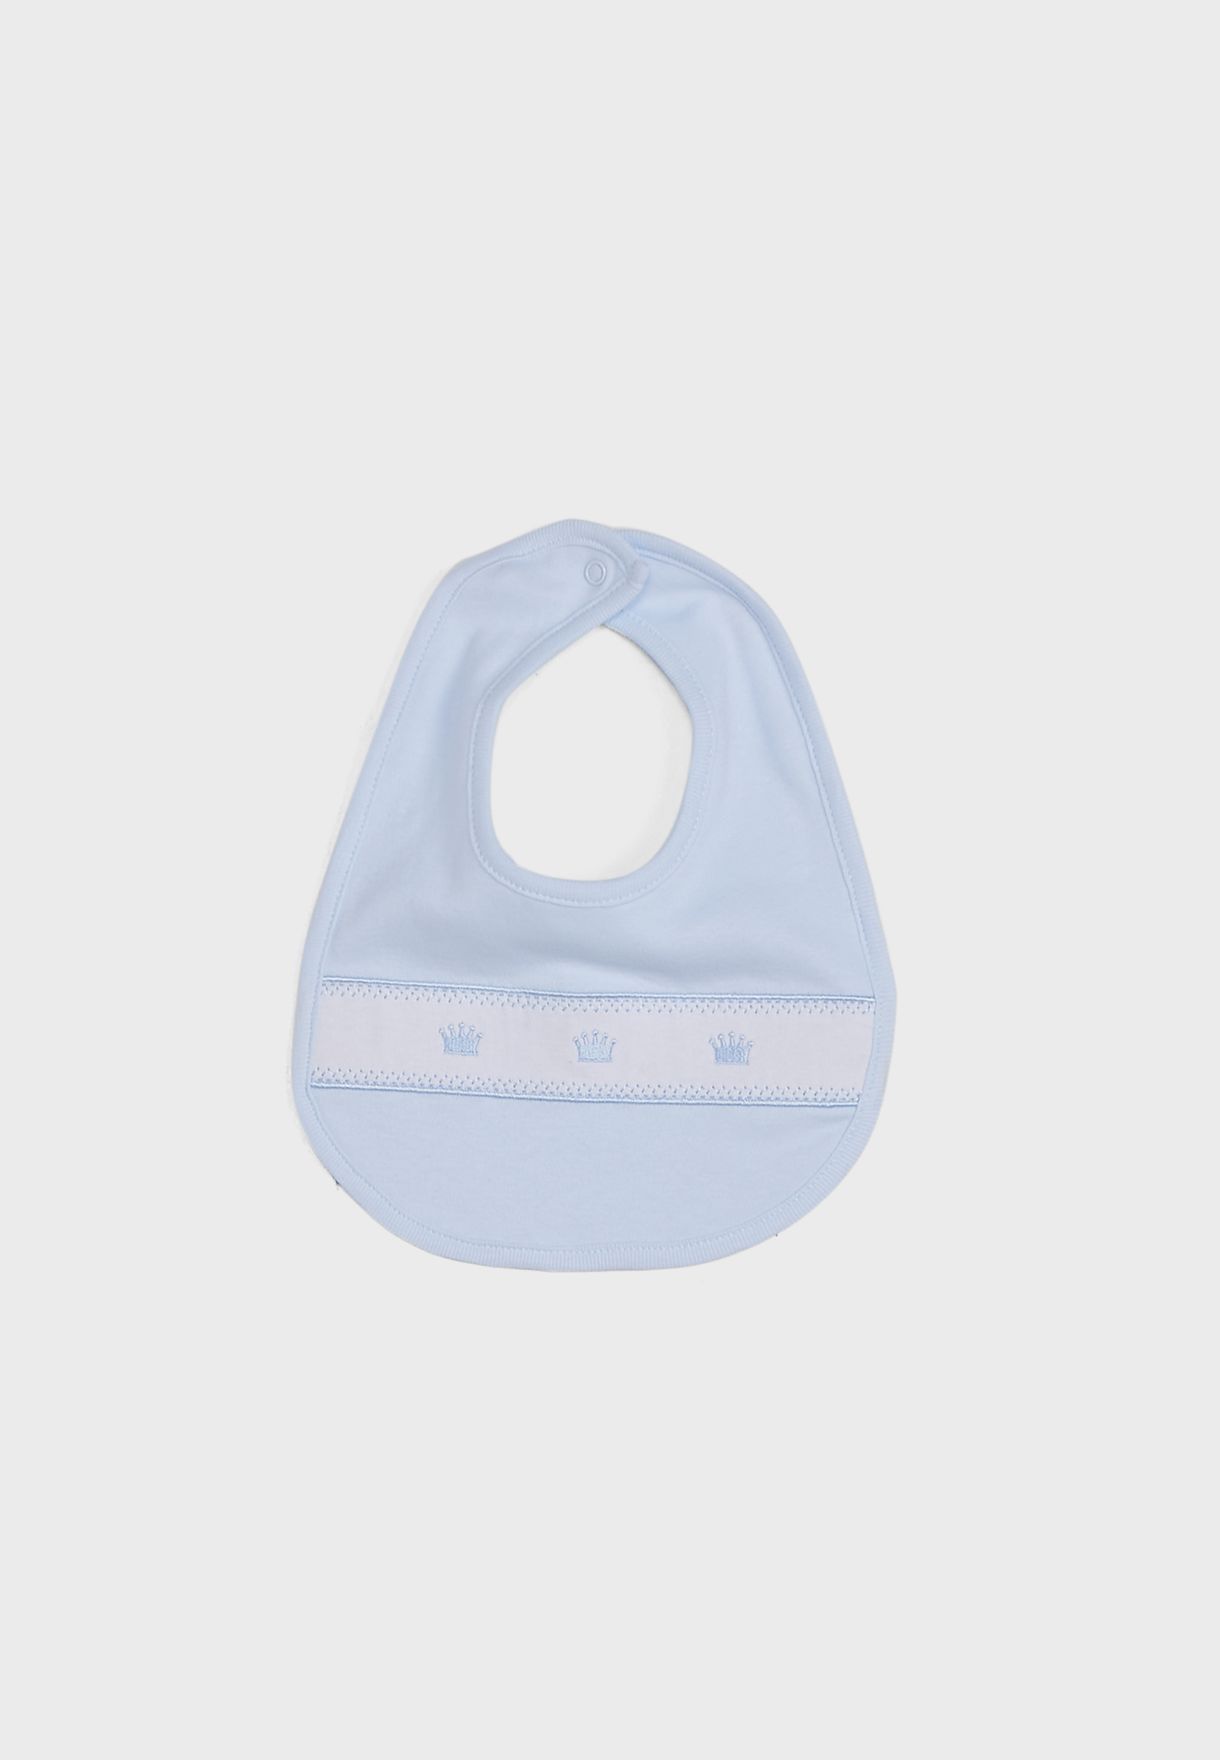 Infant Crown Sleep suit + Hat Bib Set